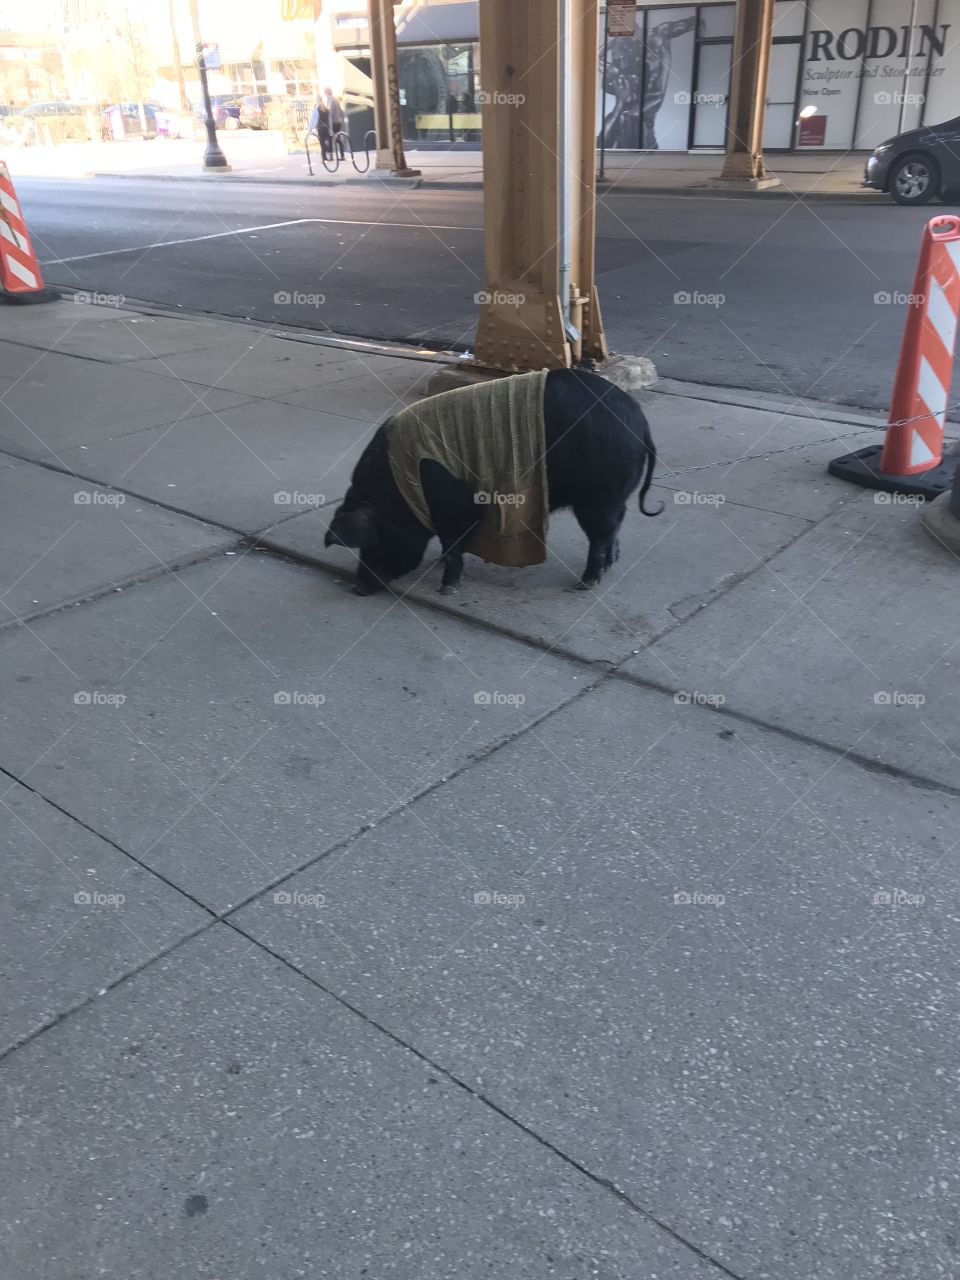 Fancy pig in a vest